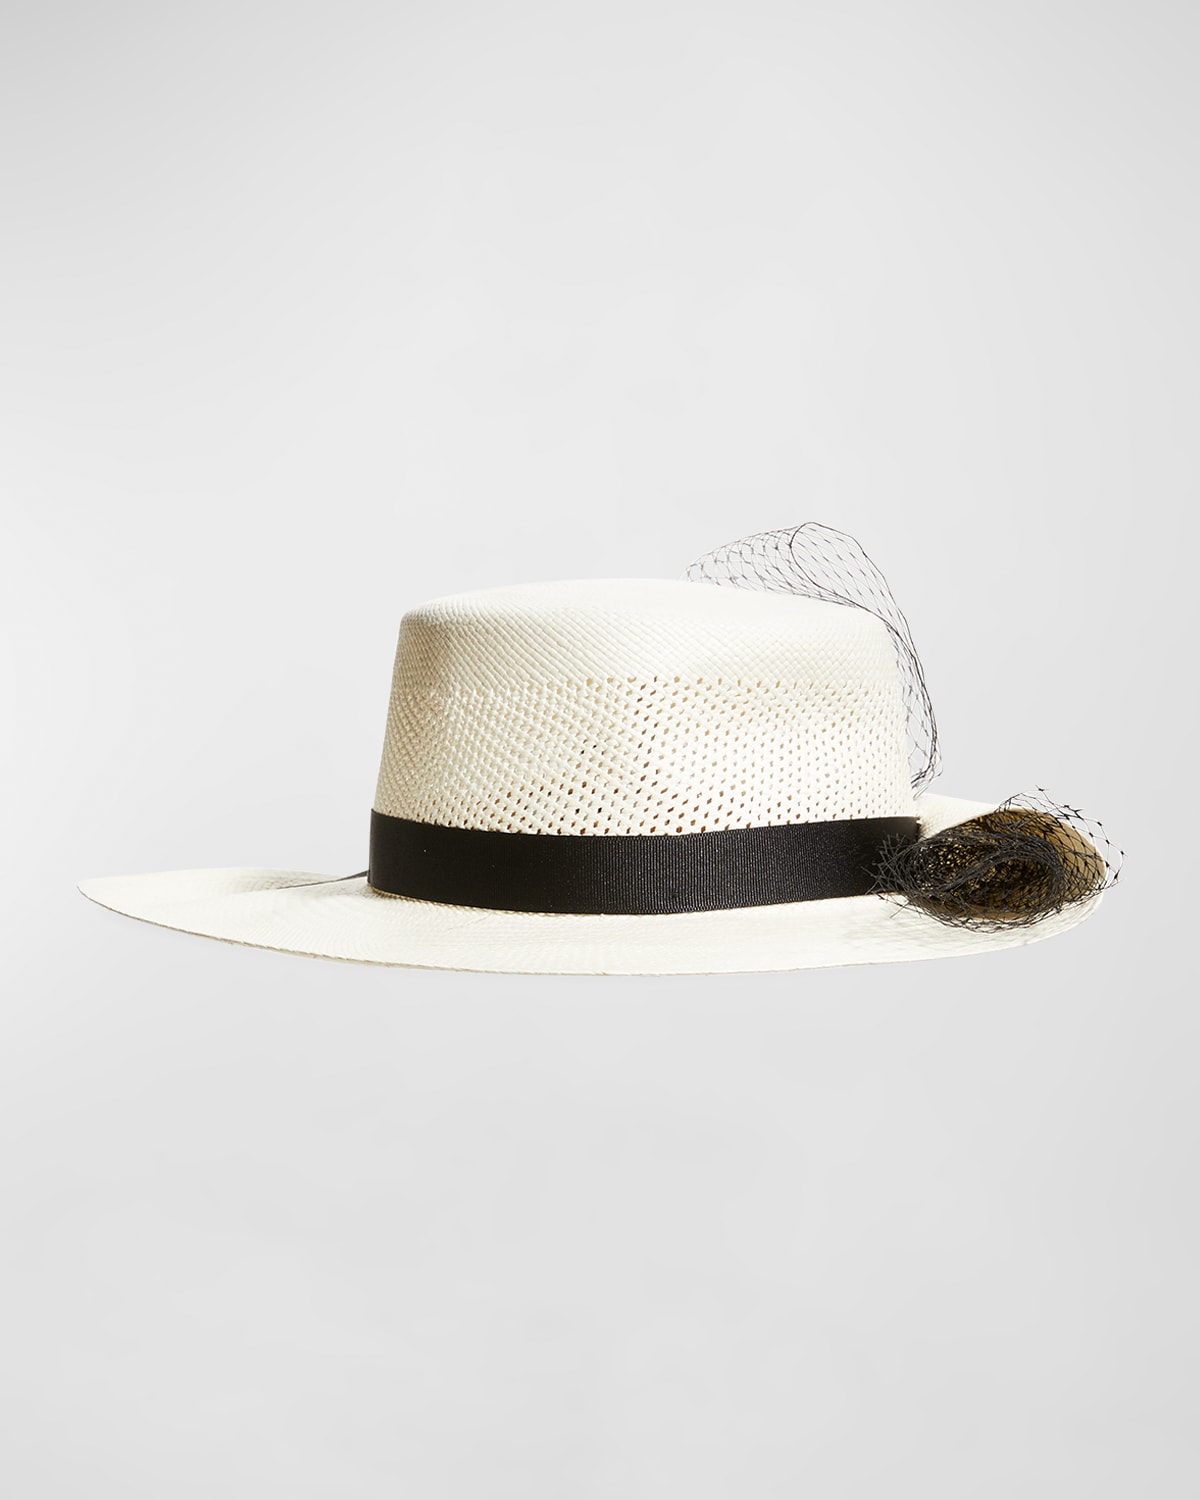 Sensi Studio Perforated Straw Hat W/ Tulle Veil In White Black